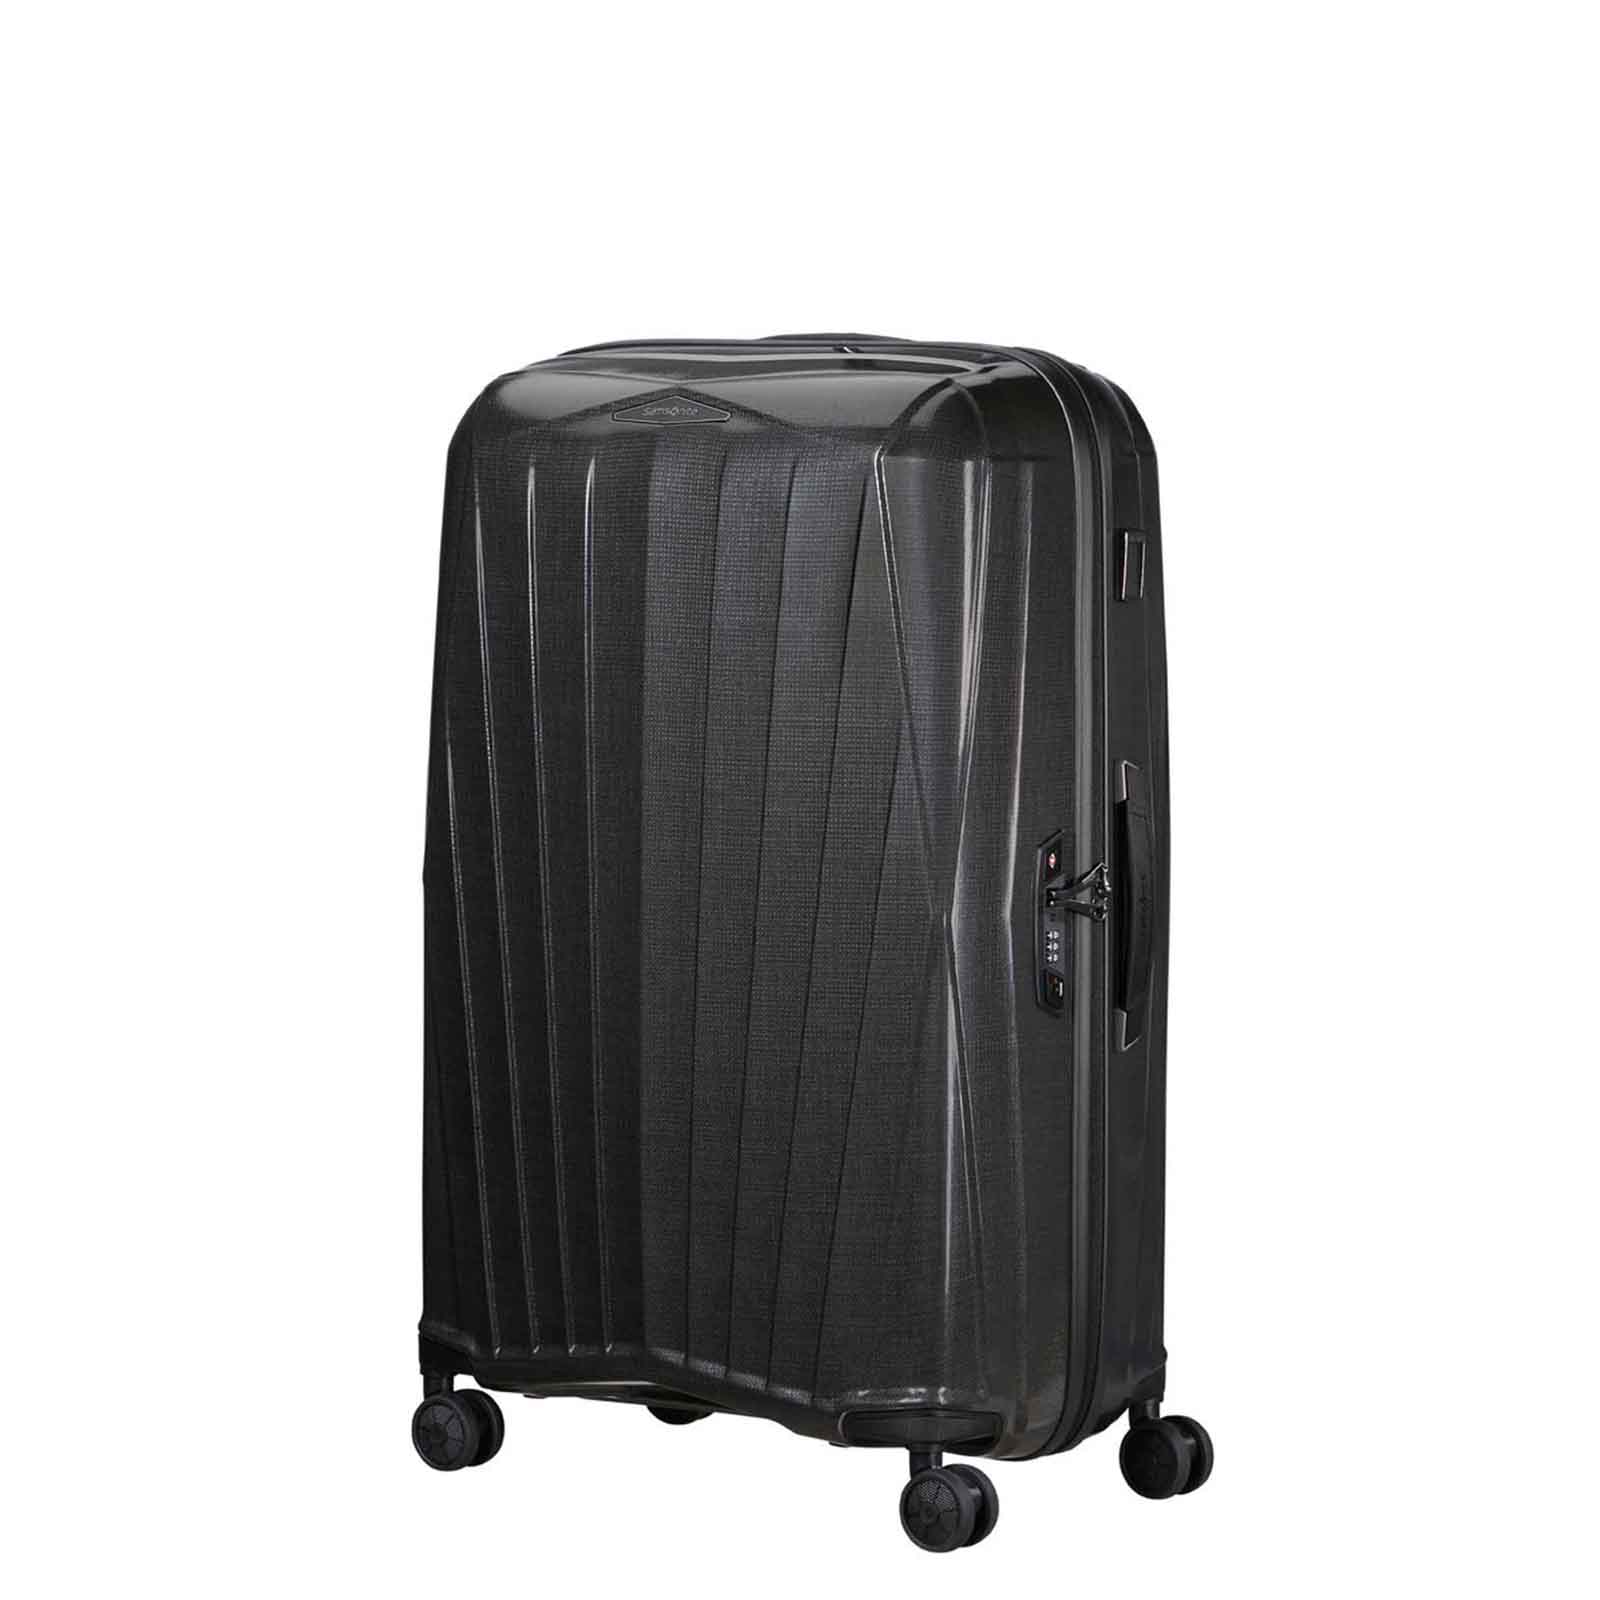 Samsonite-Major-Lite-77cm-Suitcase-Black-Front-Open